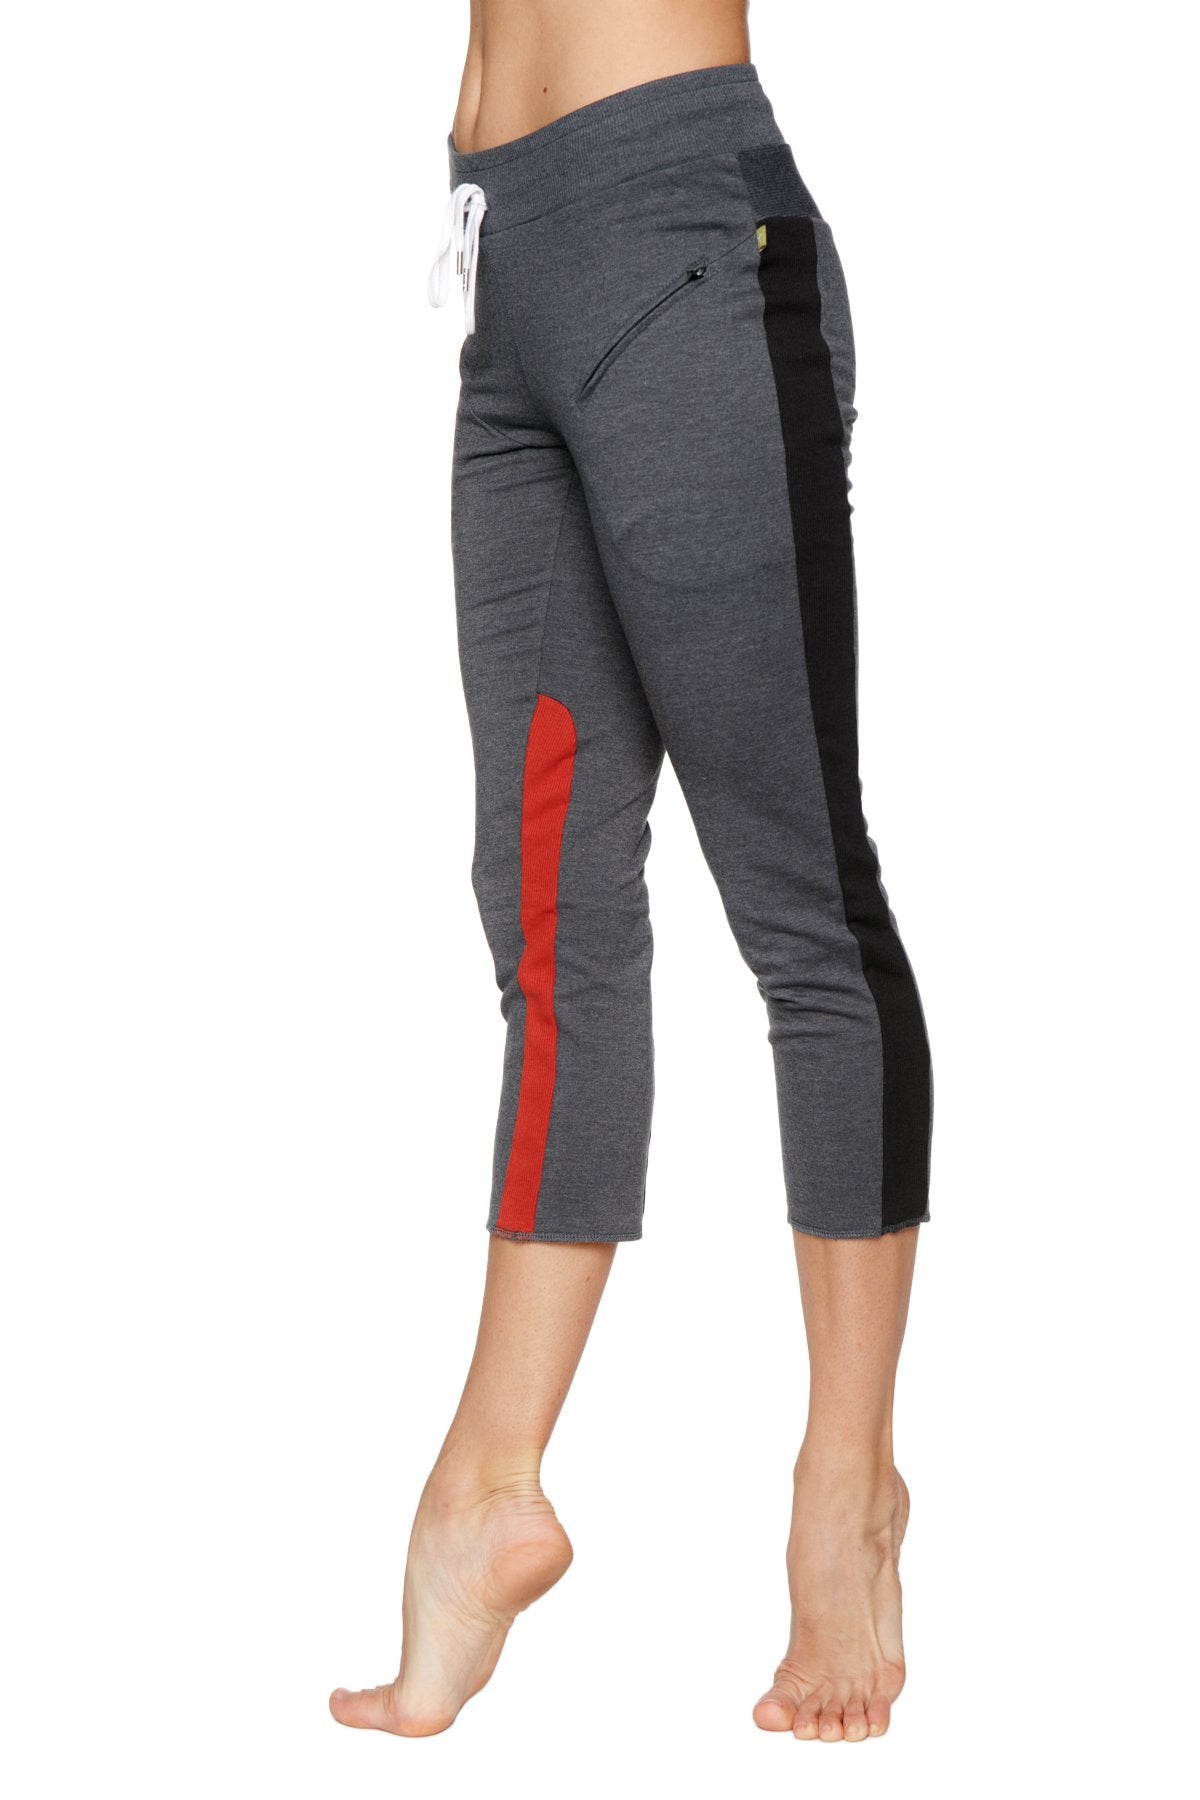 Women's 4/5 Length Zipper Pocket Capri Yoga Pant (Charcoal w/Black